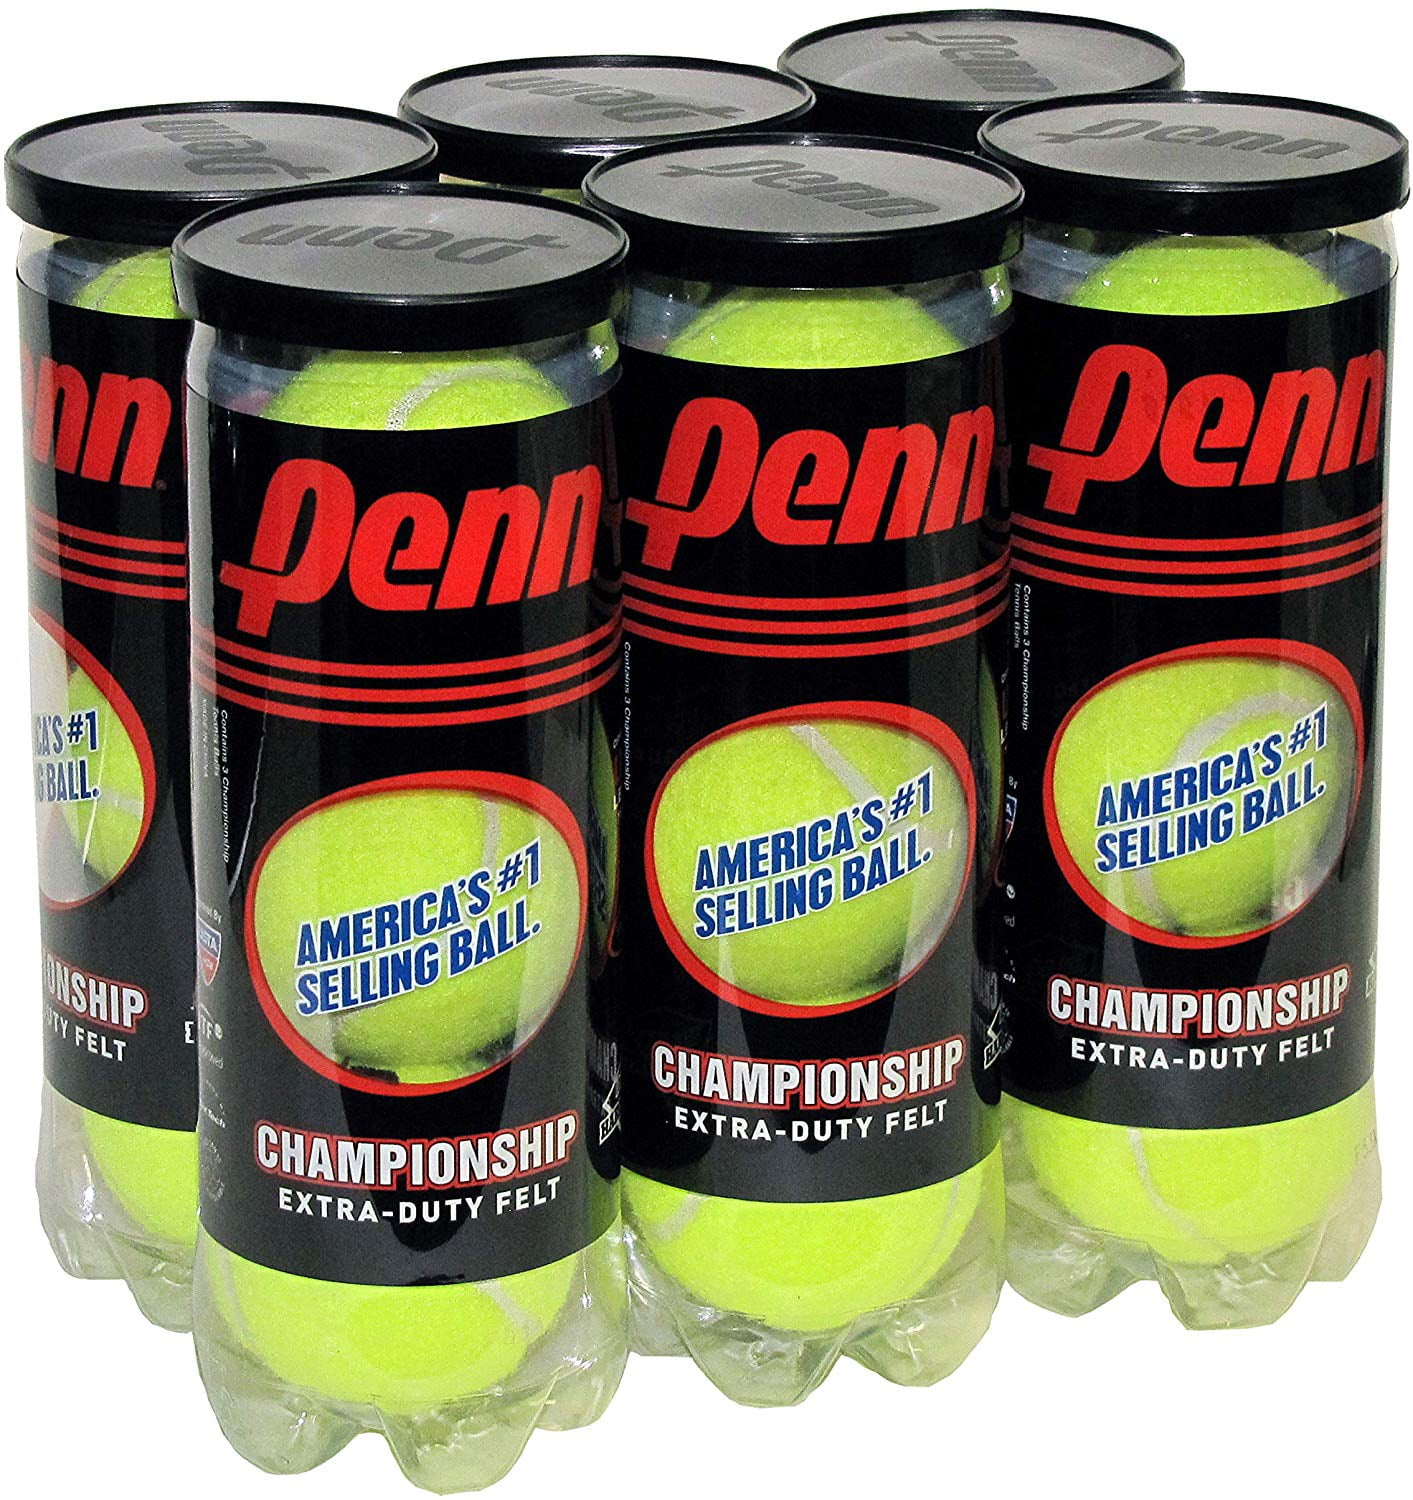 Penn Championship Extra Duty Tennis Balls- case of 60 pcs free shipment 